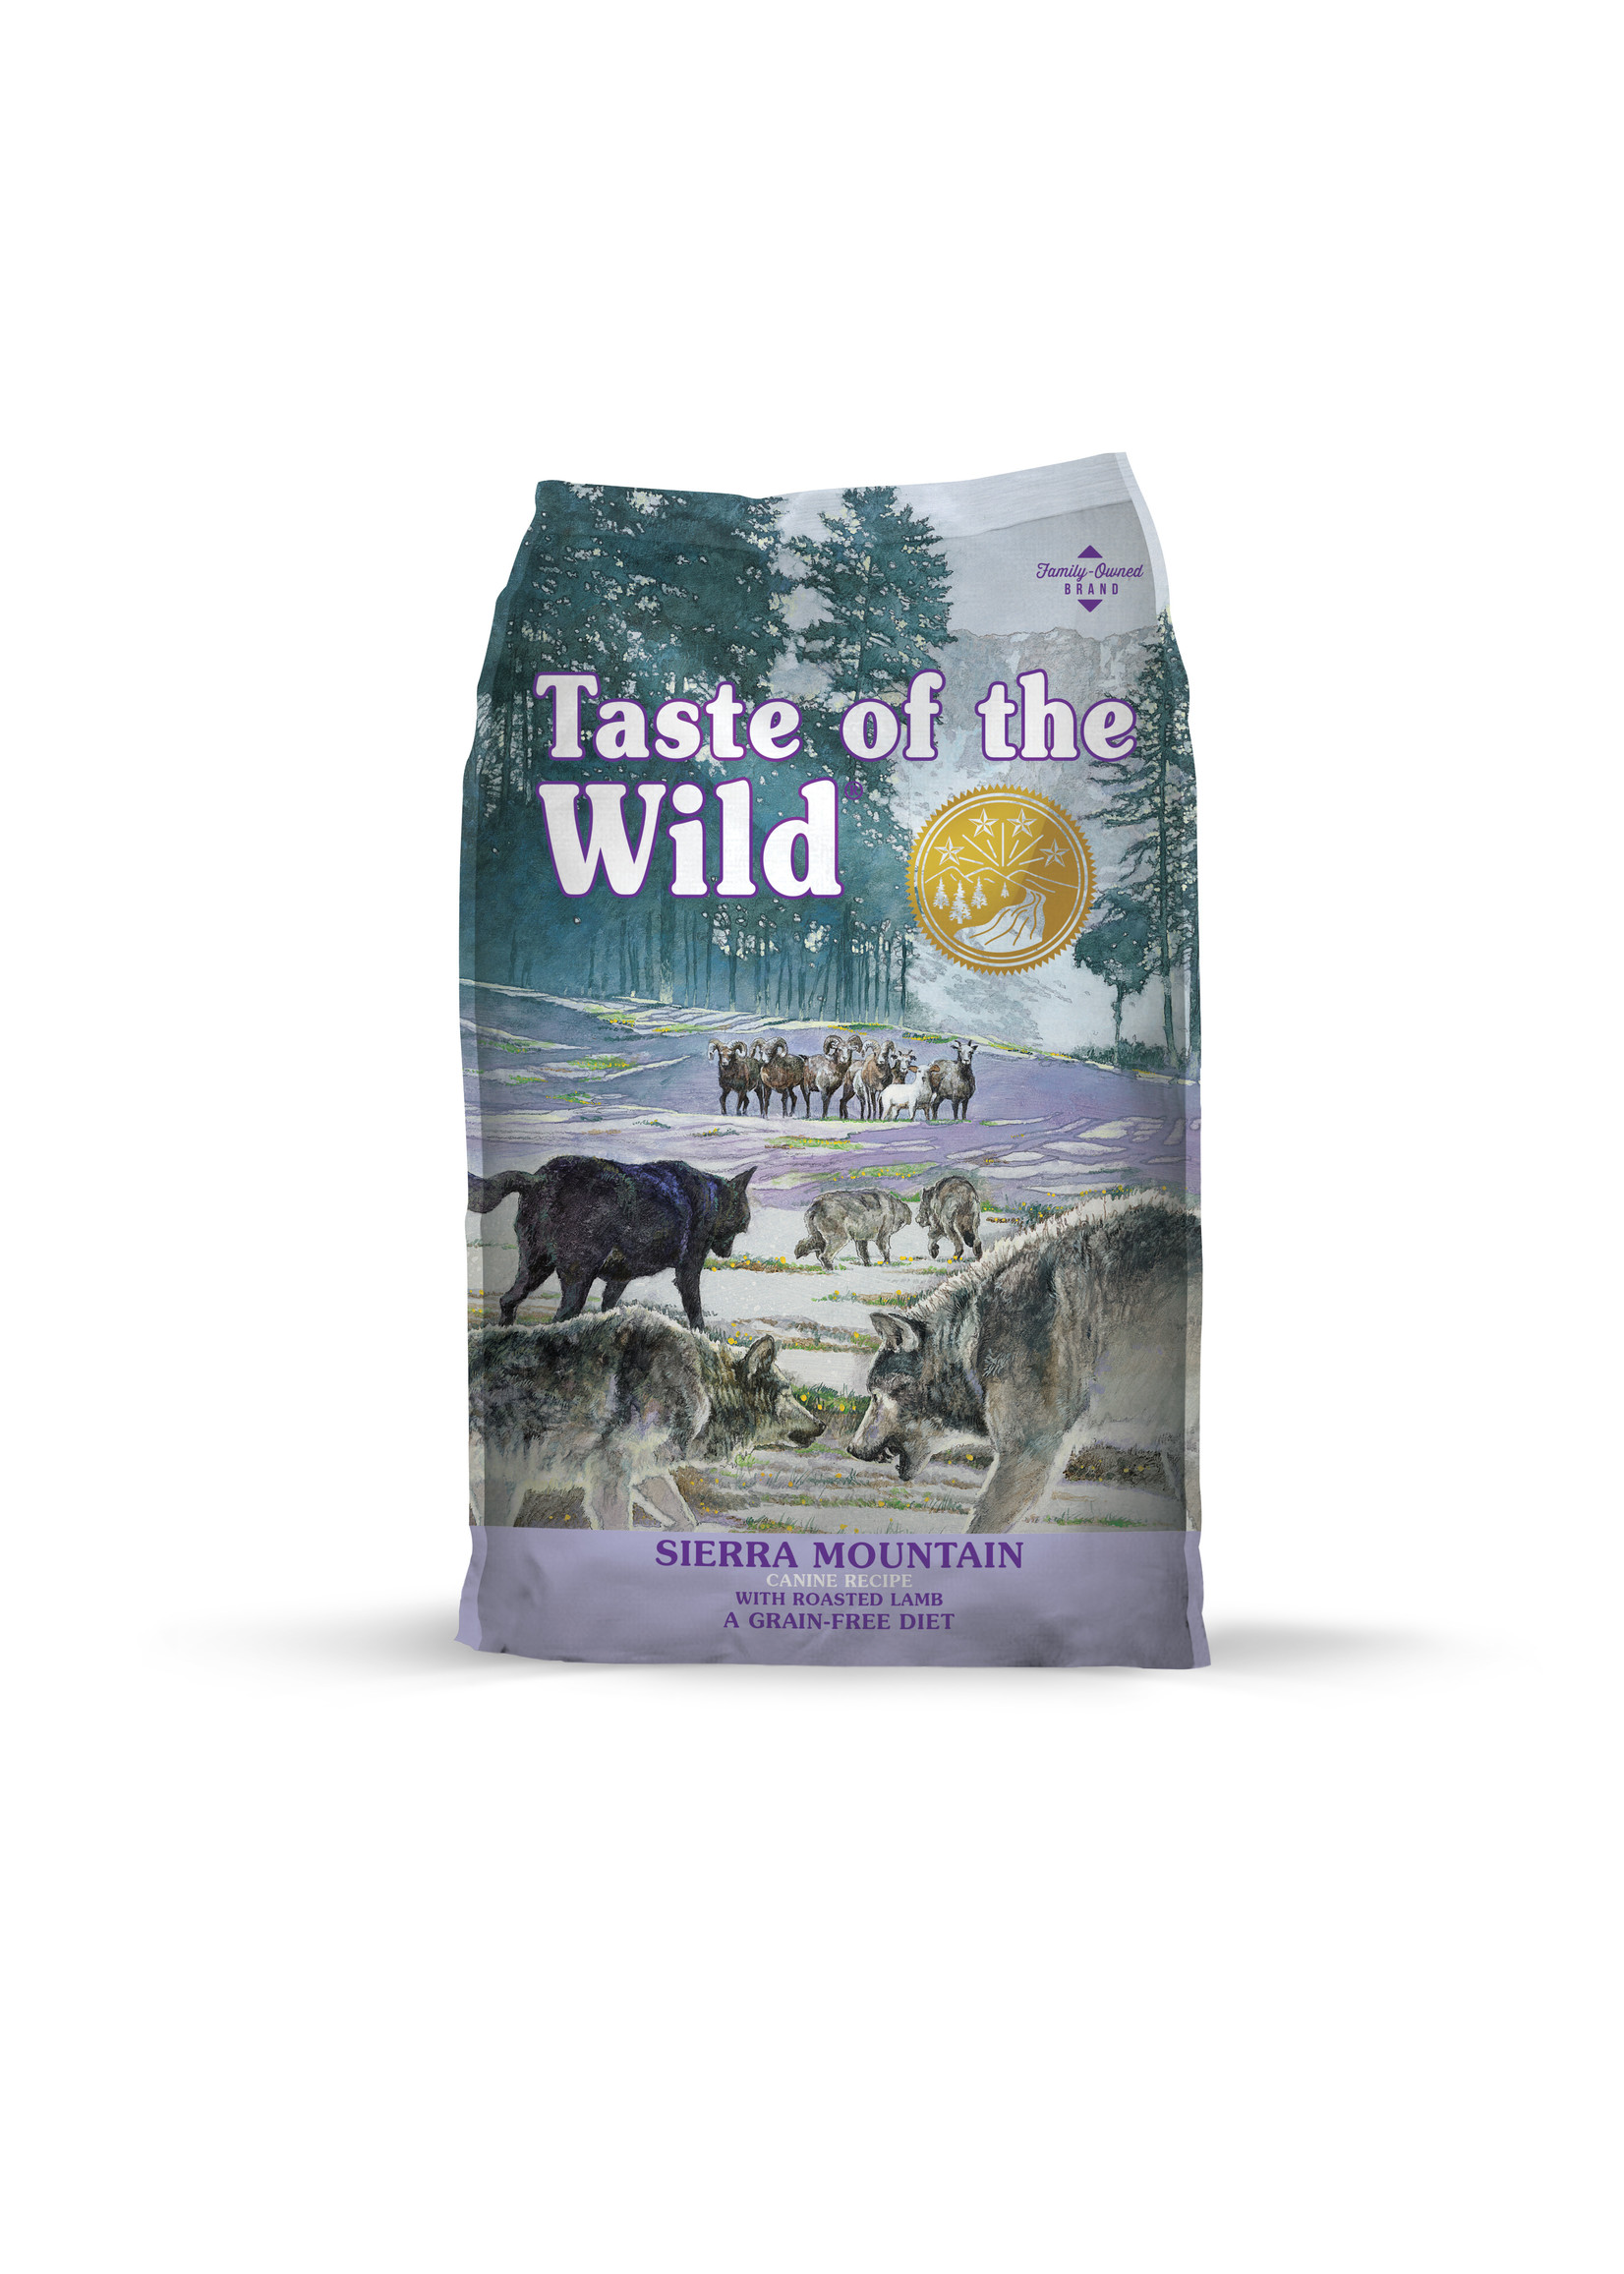 Taste of the Wild Taste of the Wild Dog Food